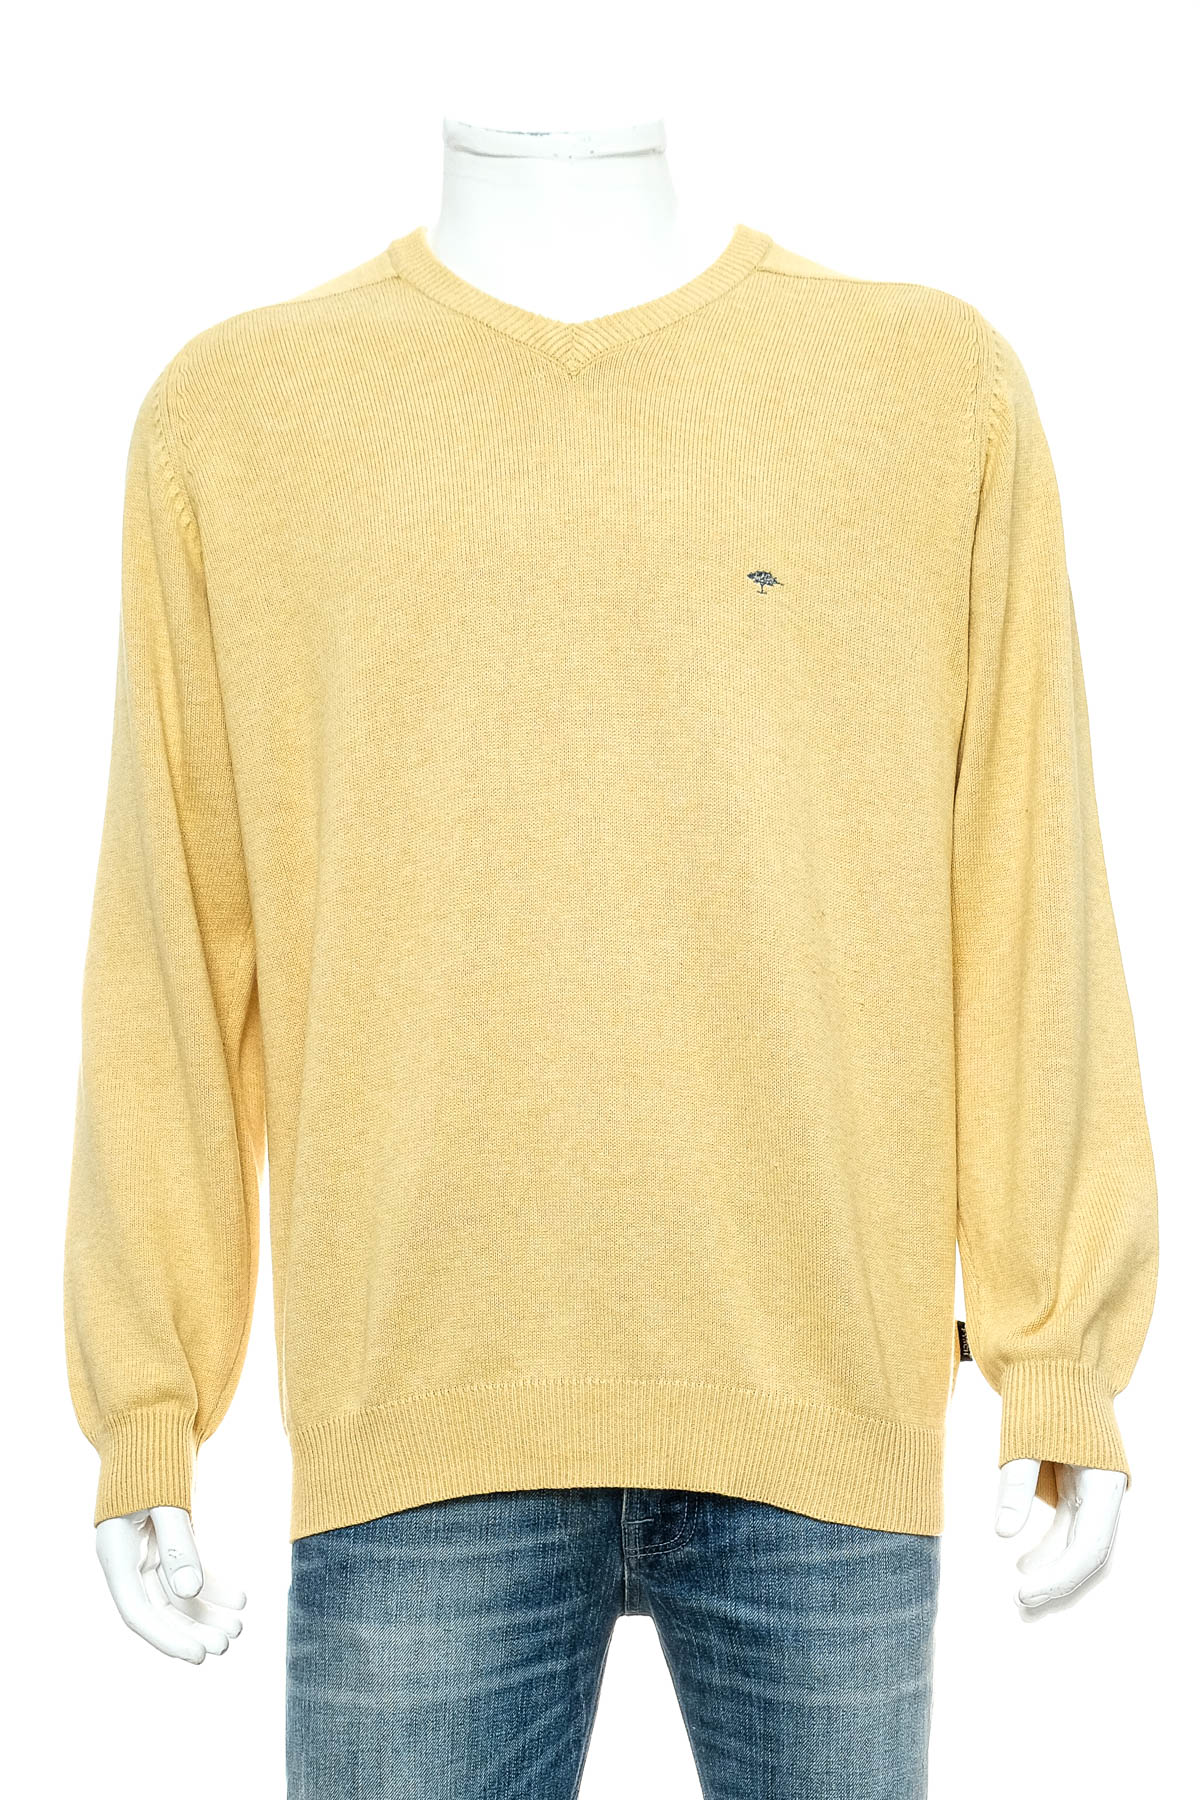 Men's sweater - Fynch Hatton - 0